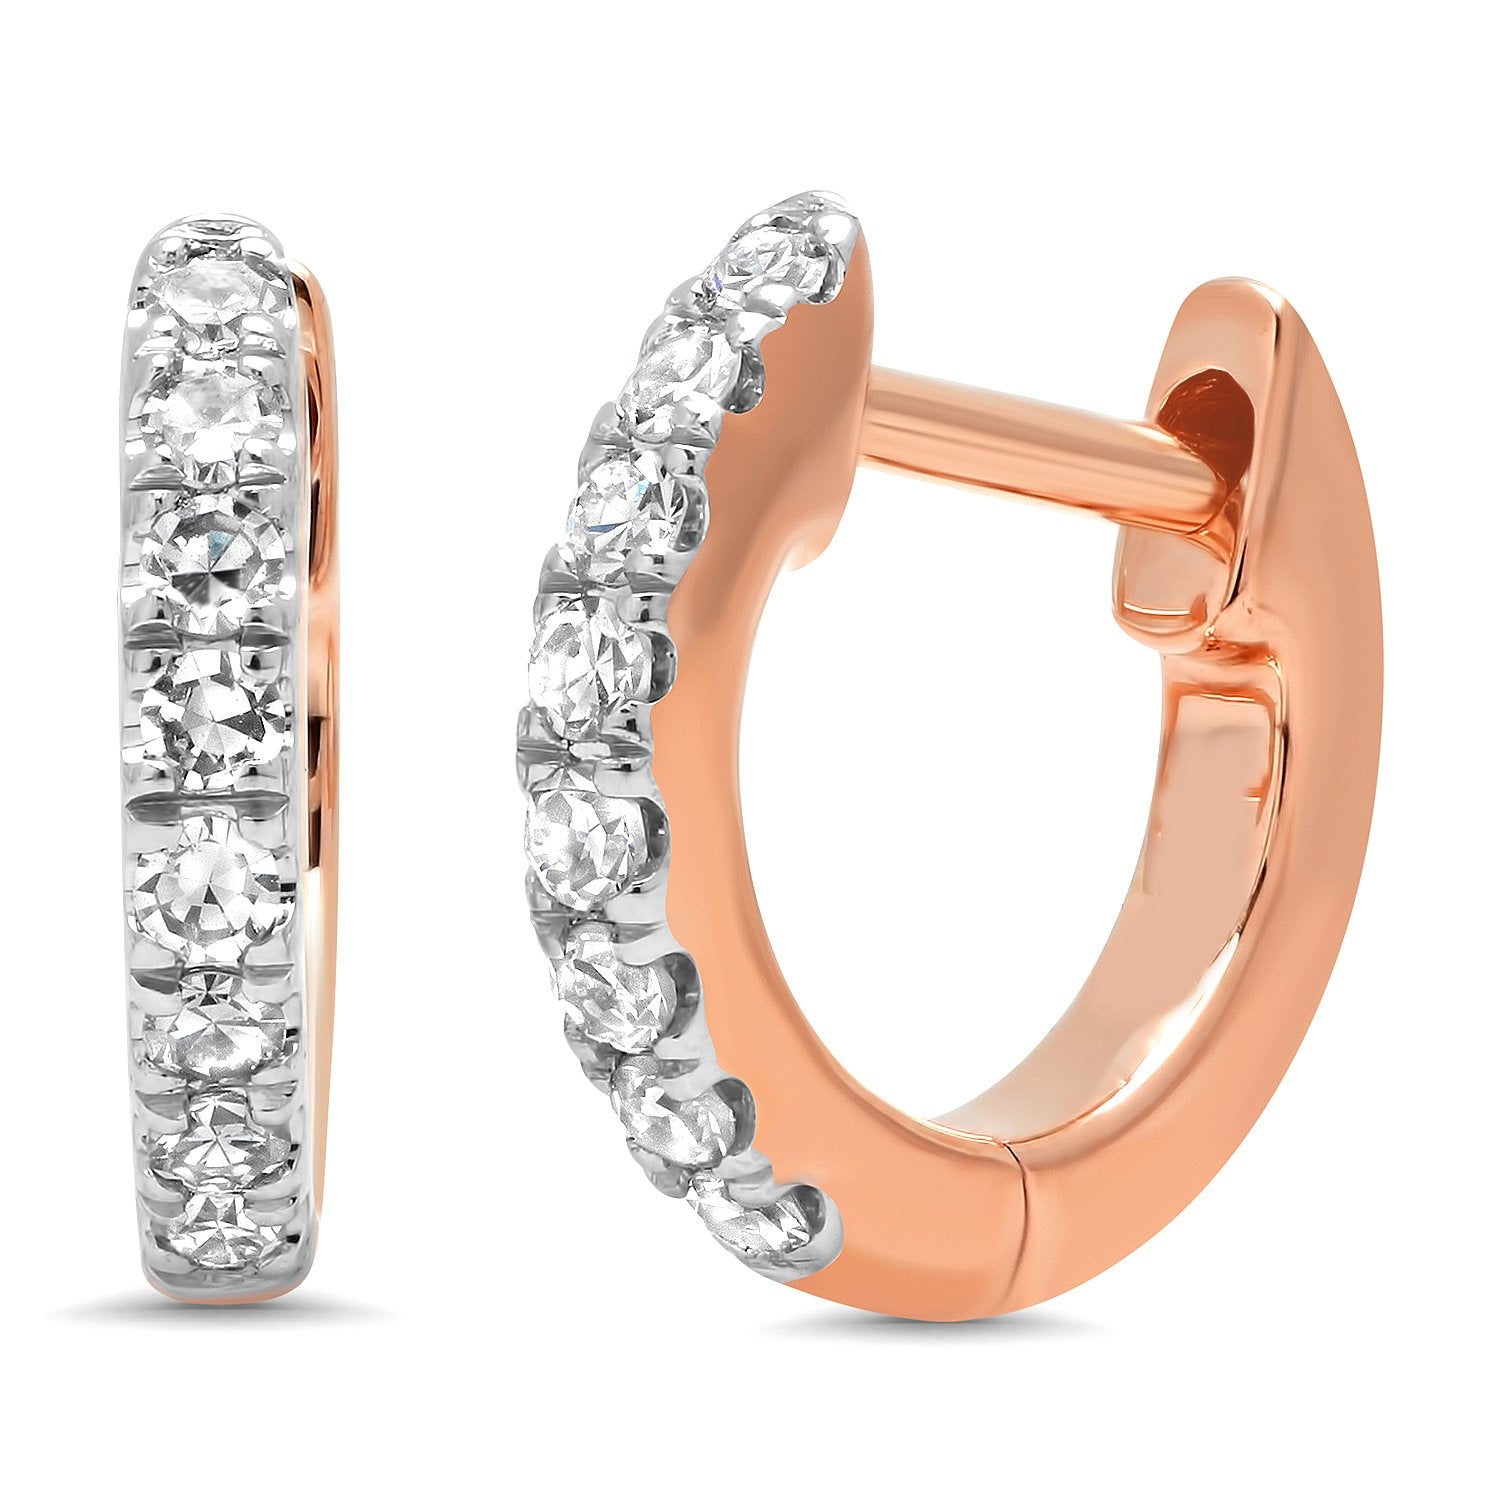 Magnet Earrings- Eriness Jewelry